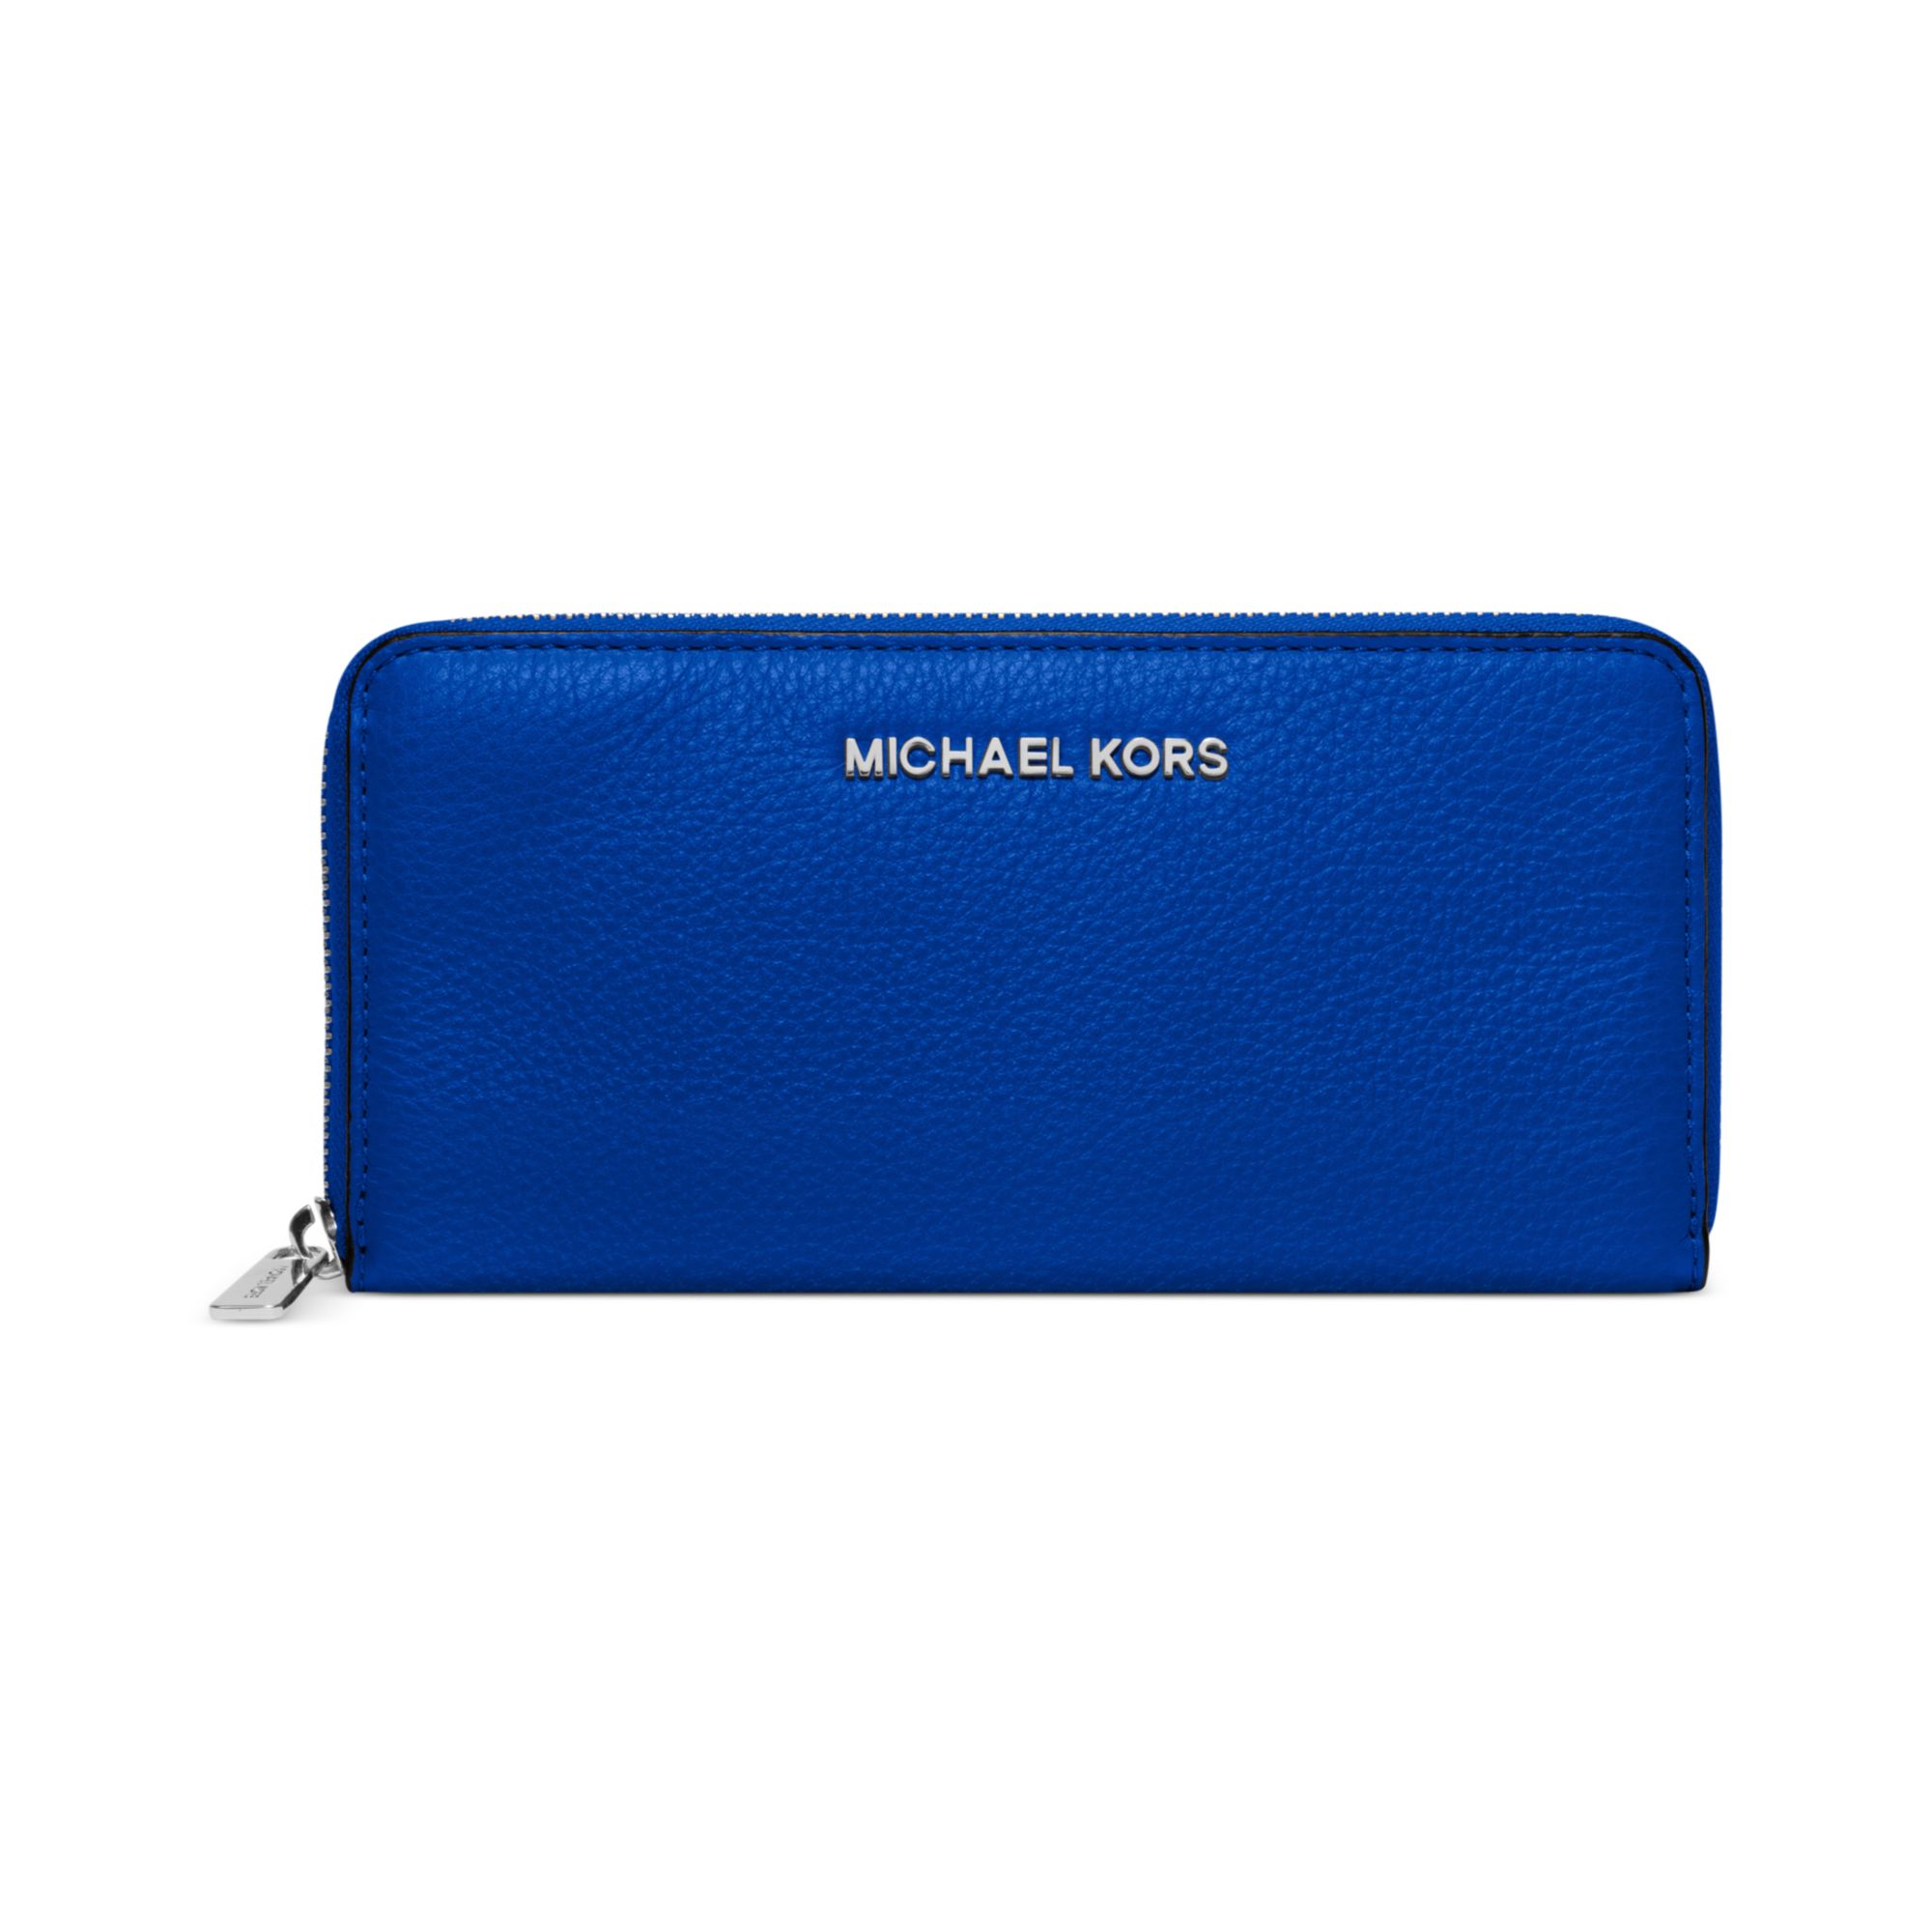 Michael Kors Bedford Zip Around Continental Wallet in Blue | Lyst